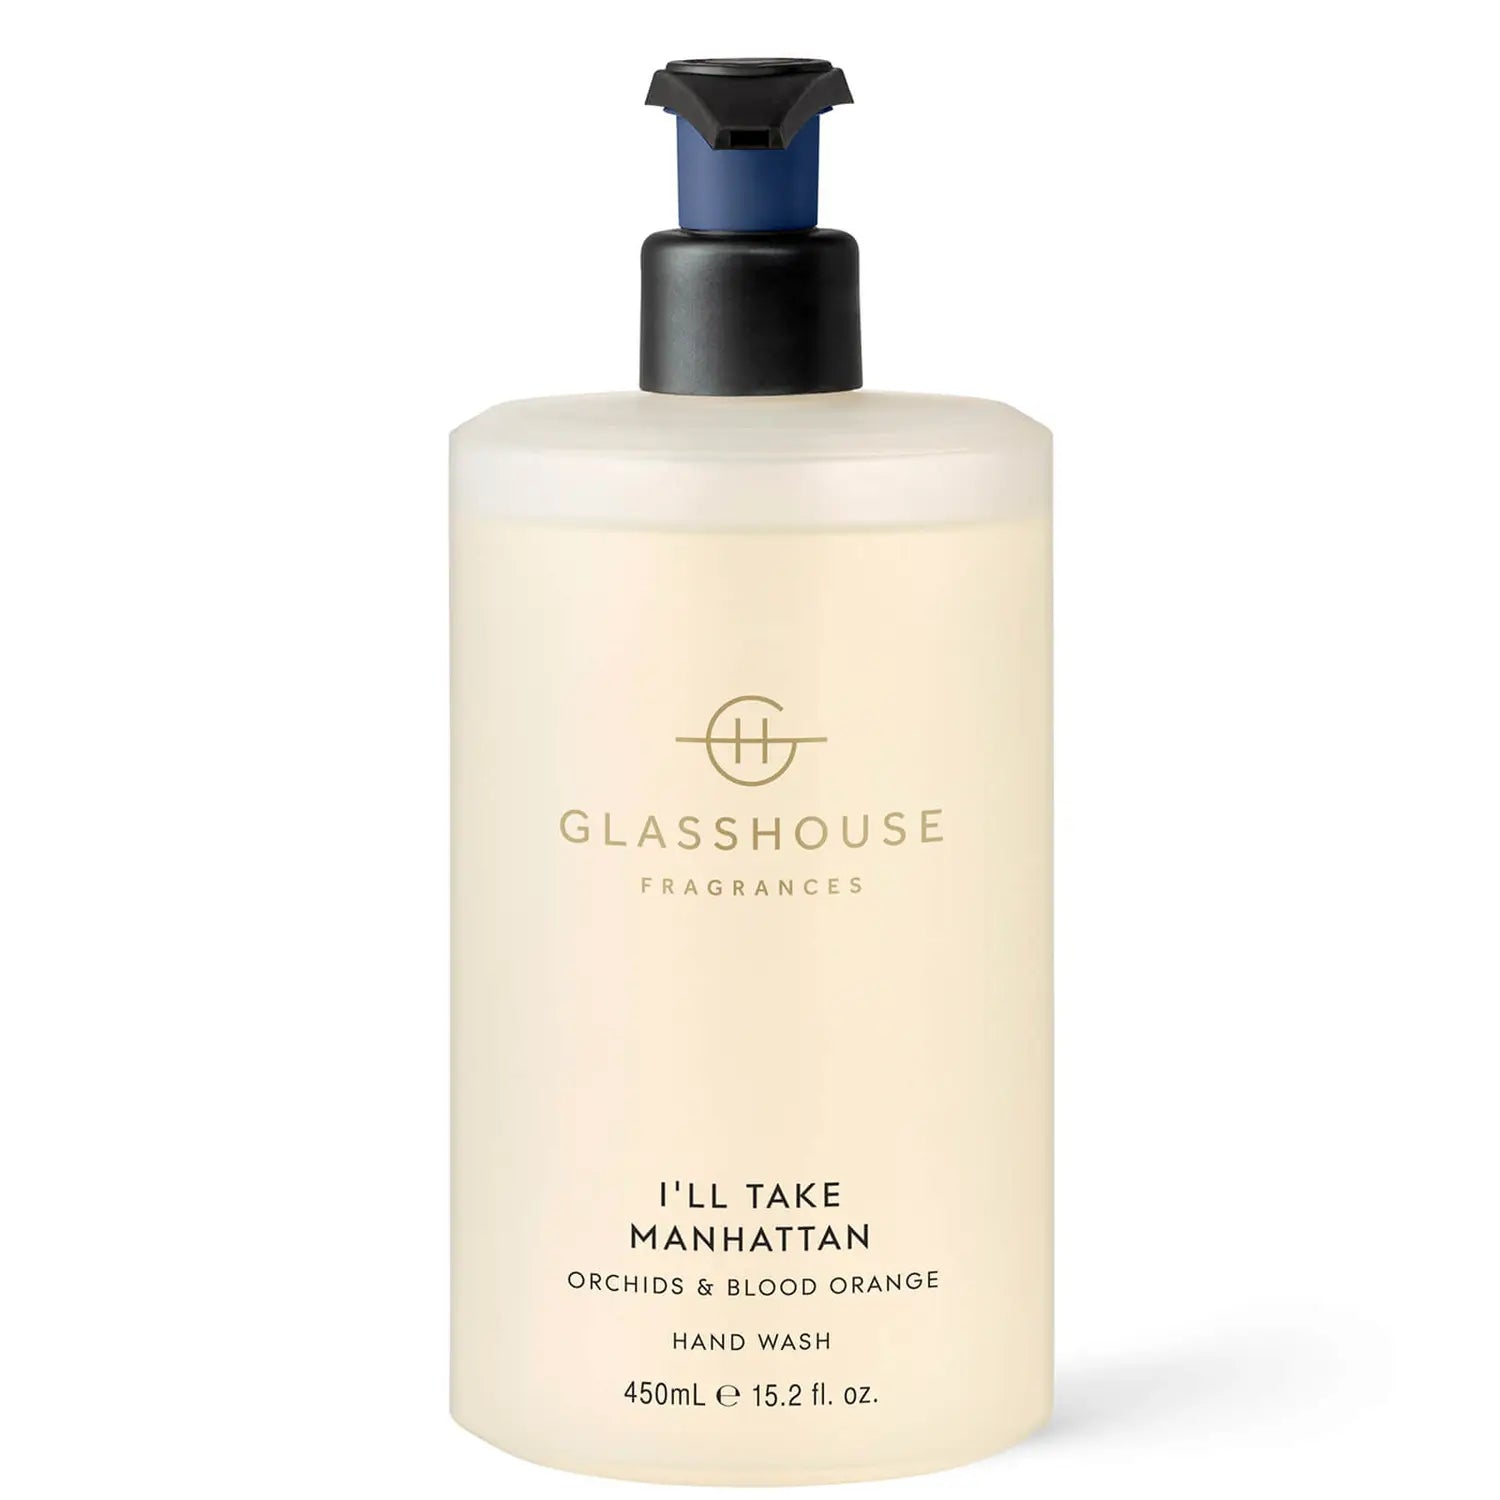 Glasshouse Fragrances I'll Take Manhattan Hand Wash 450ml - Exquisite Laser Clinic